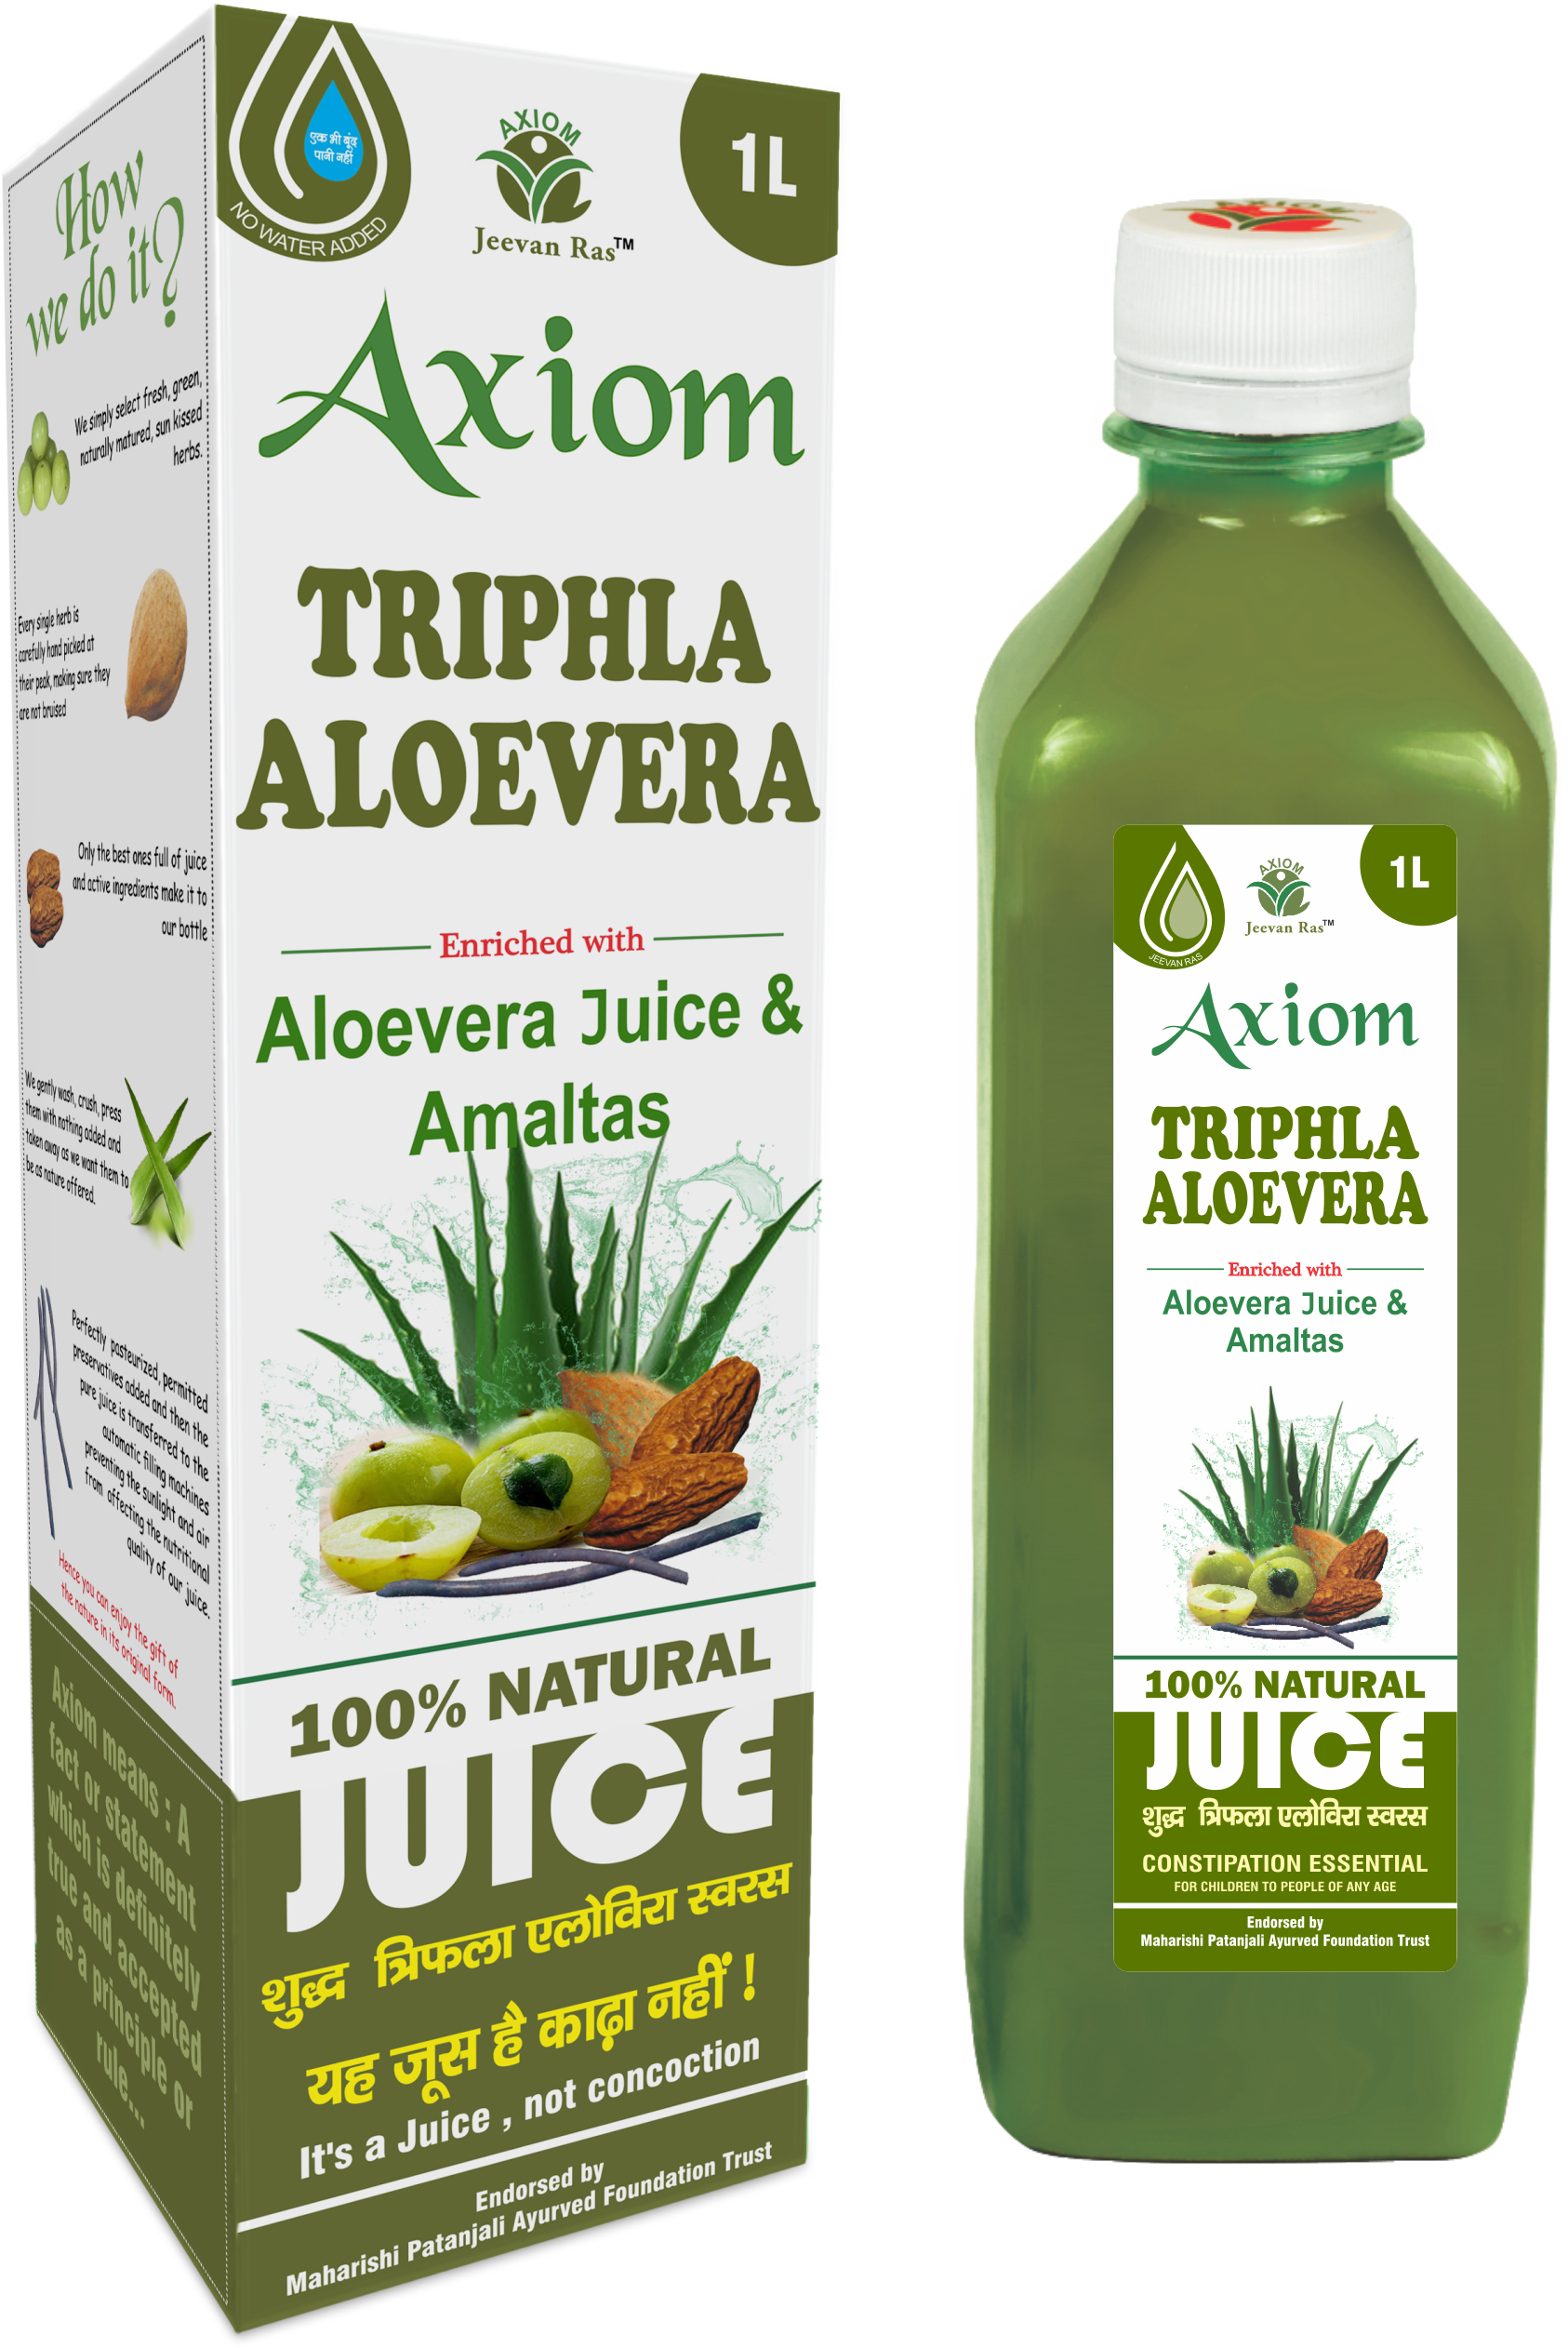 Buy Axiom Triphla Aloevera Juice at Best Price Online